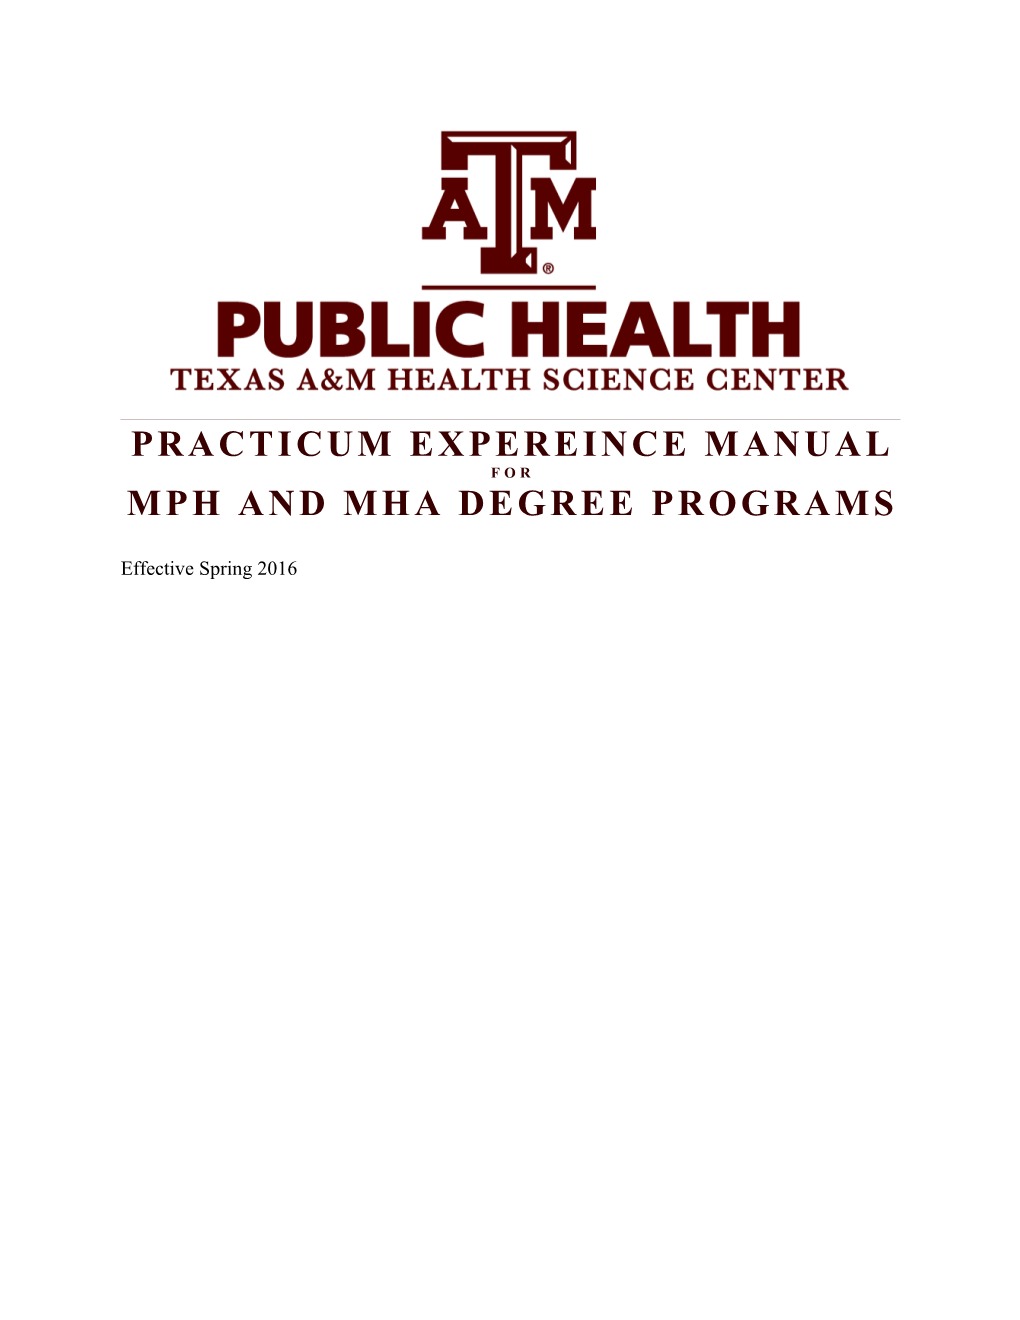 MPH and MHA Degree Programs